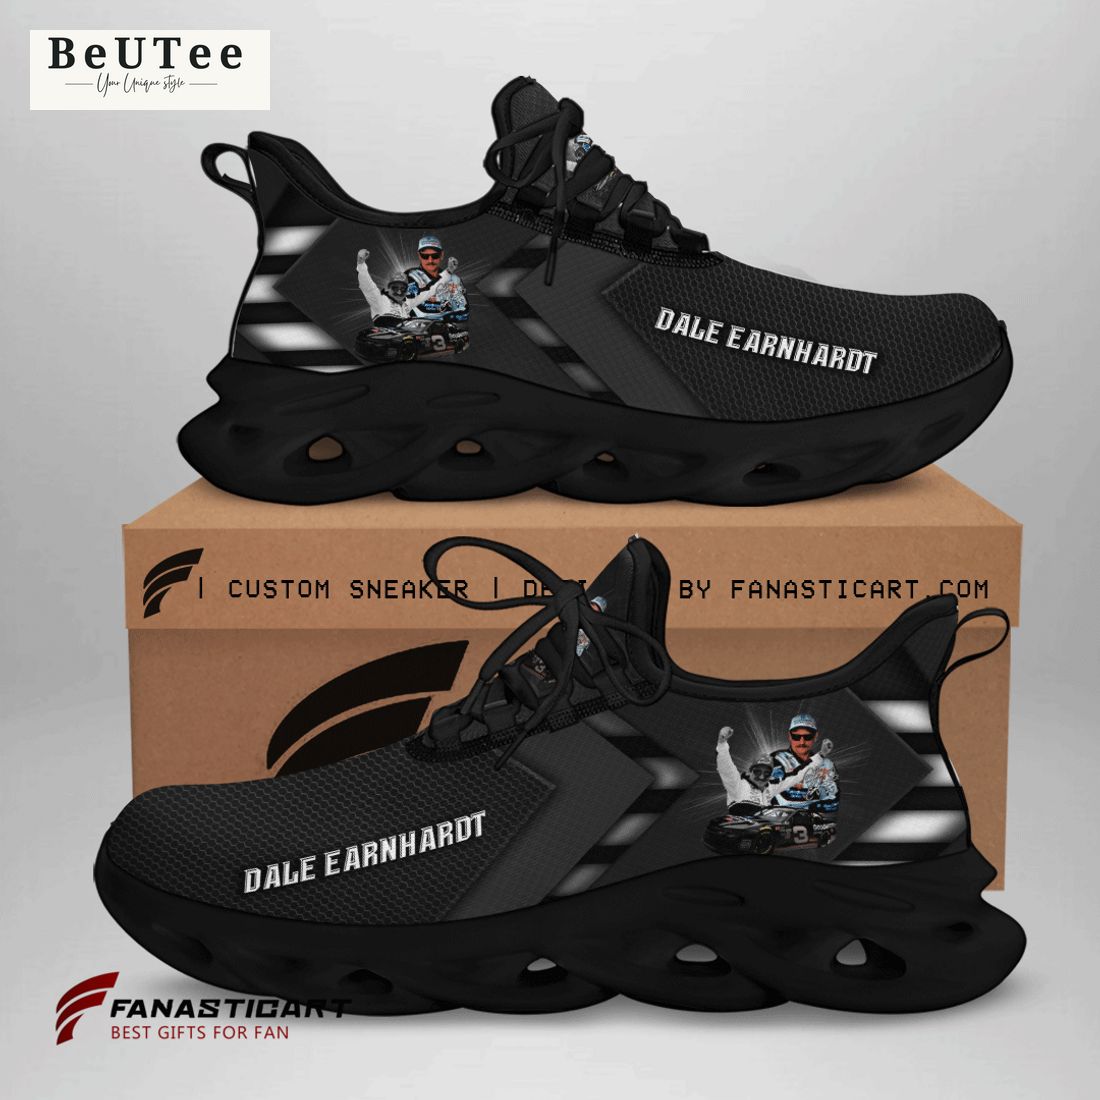 dale earnhardt black arrow custom sneaker 1 Vm8Vz